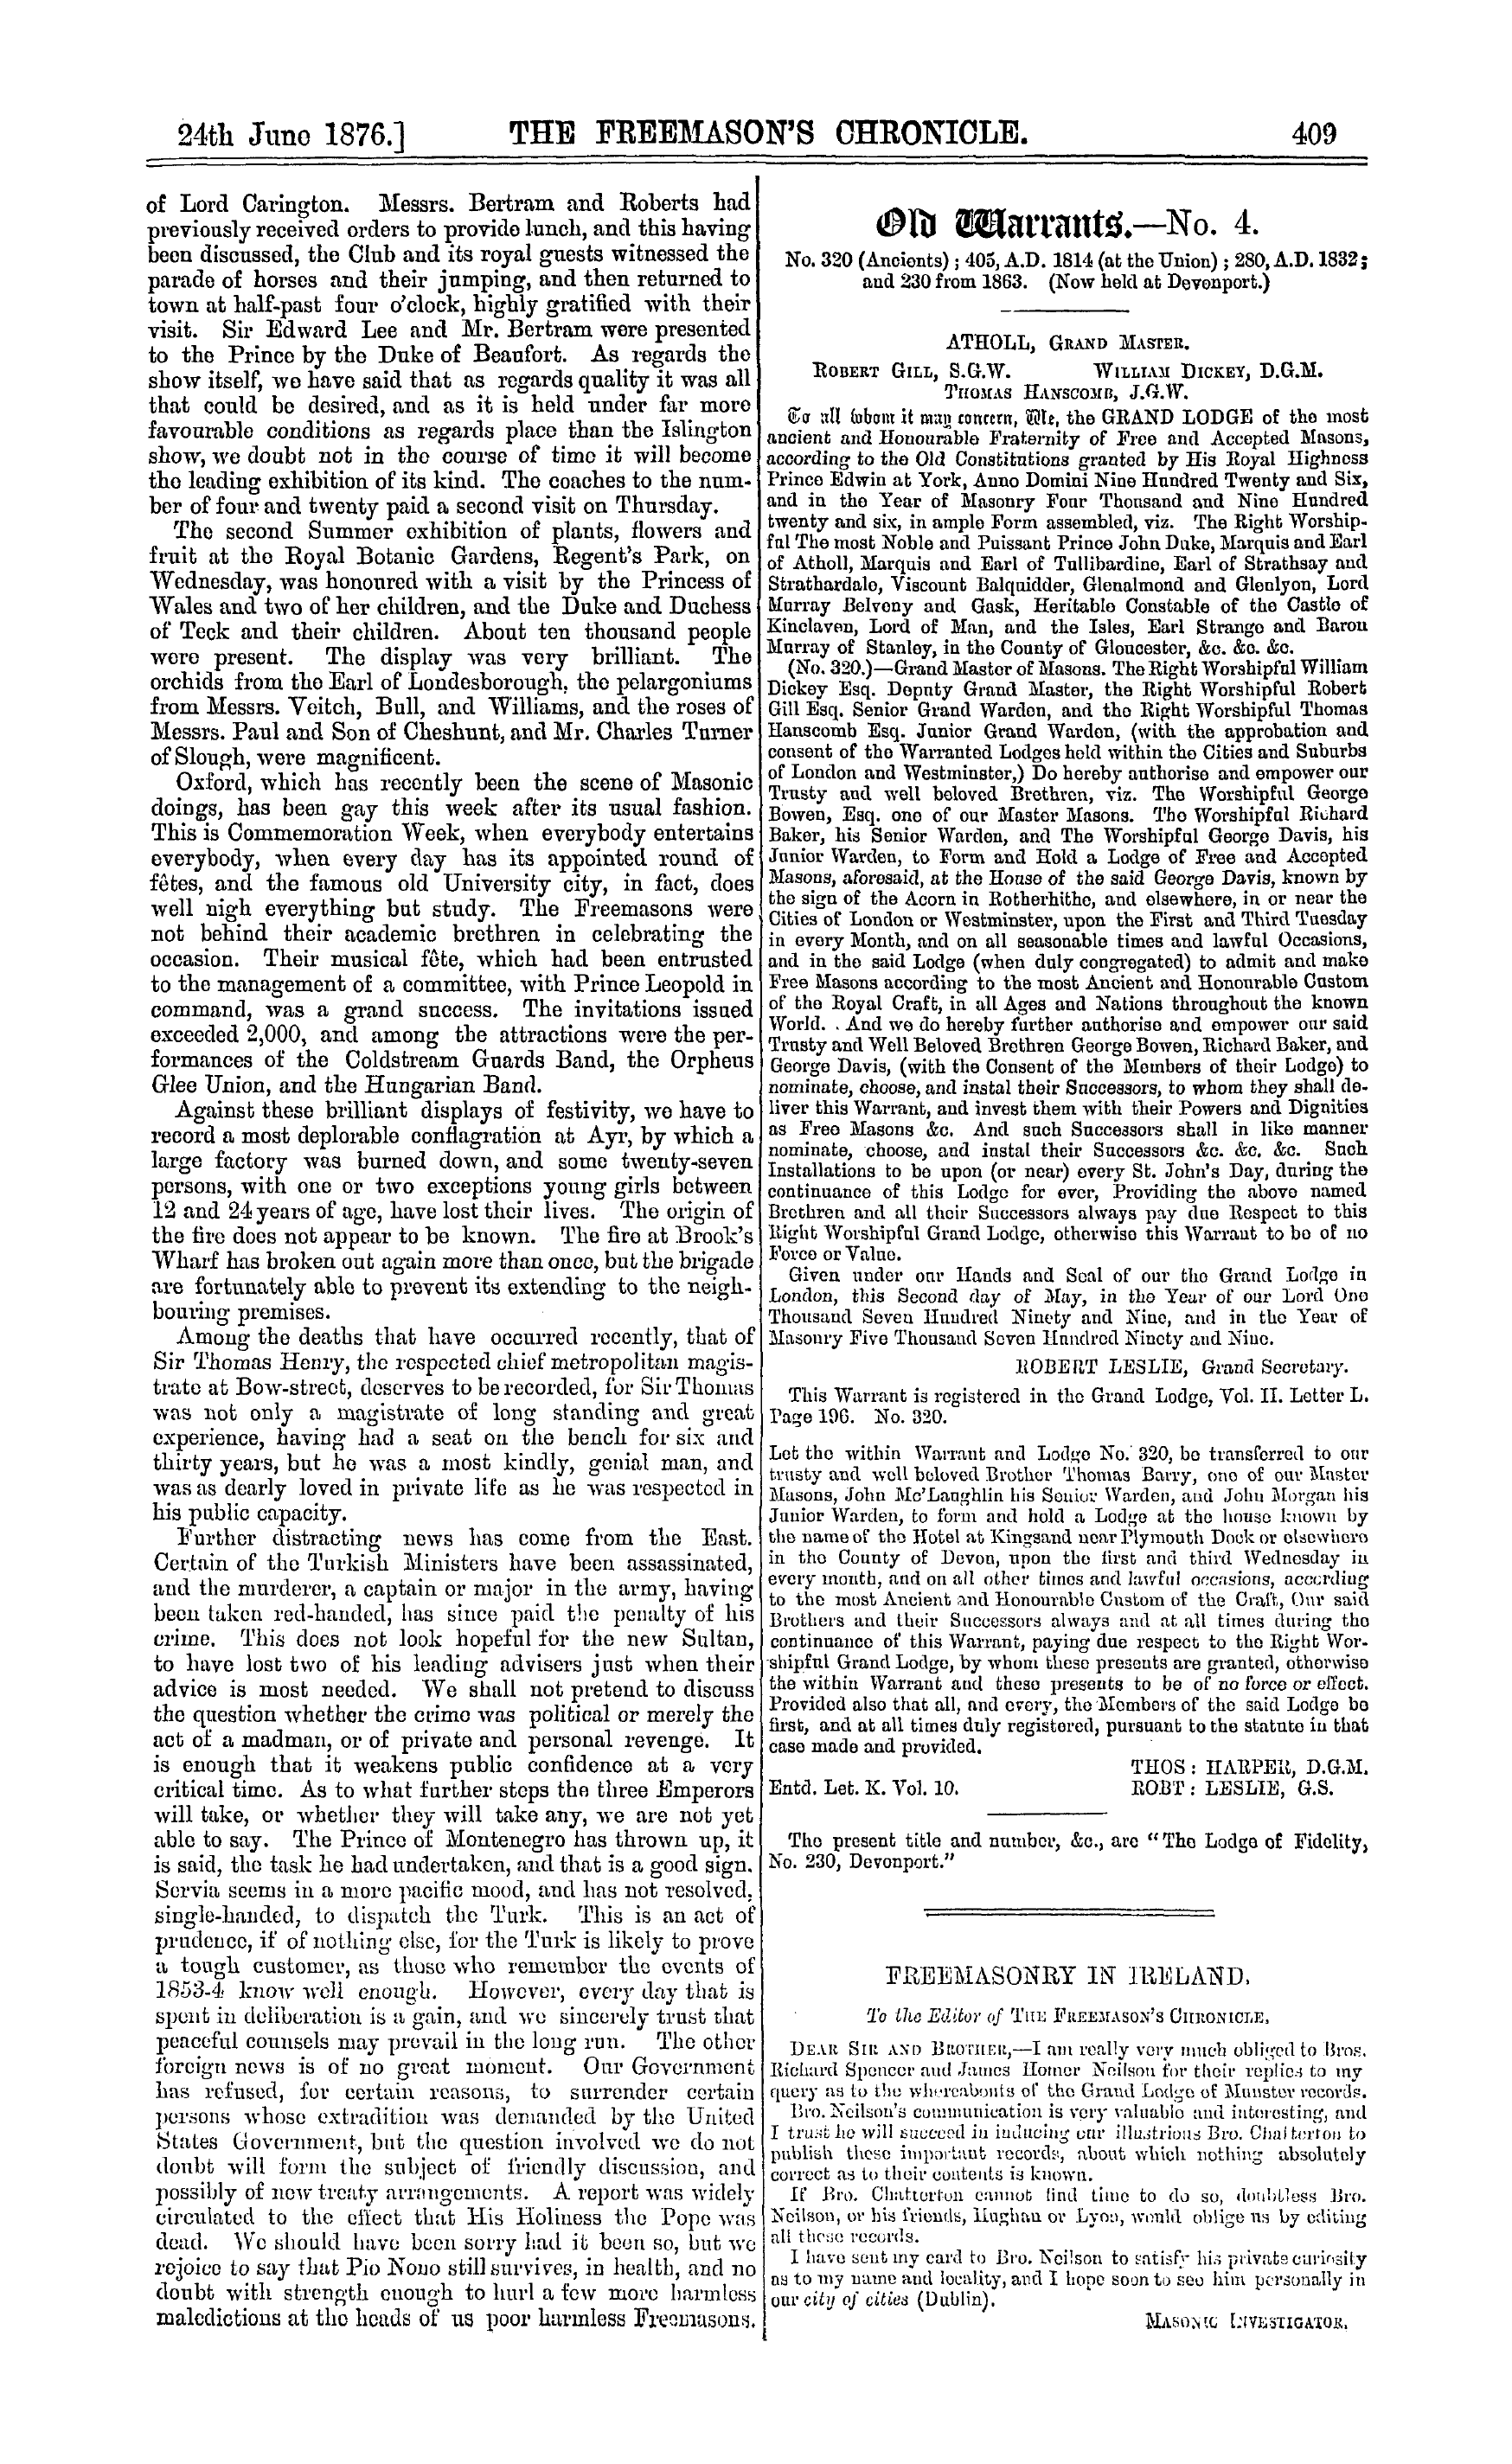 The Freemason's Chronicle: 1876-06-24: 9